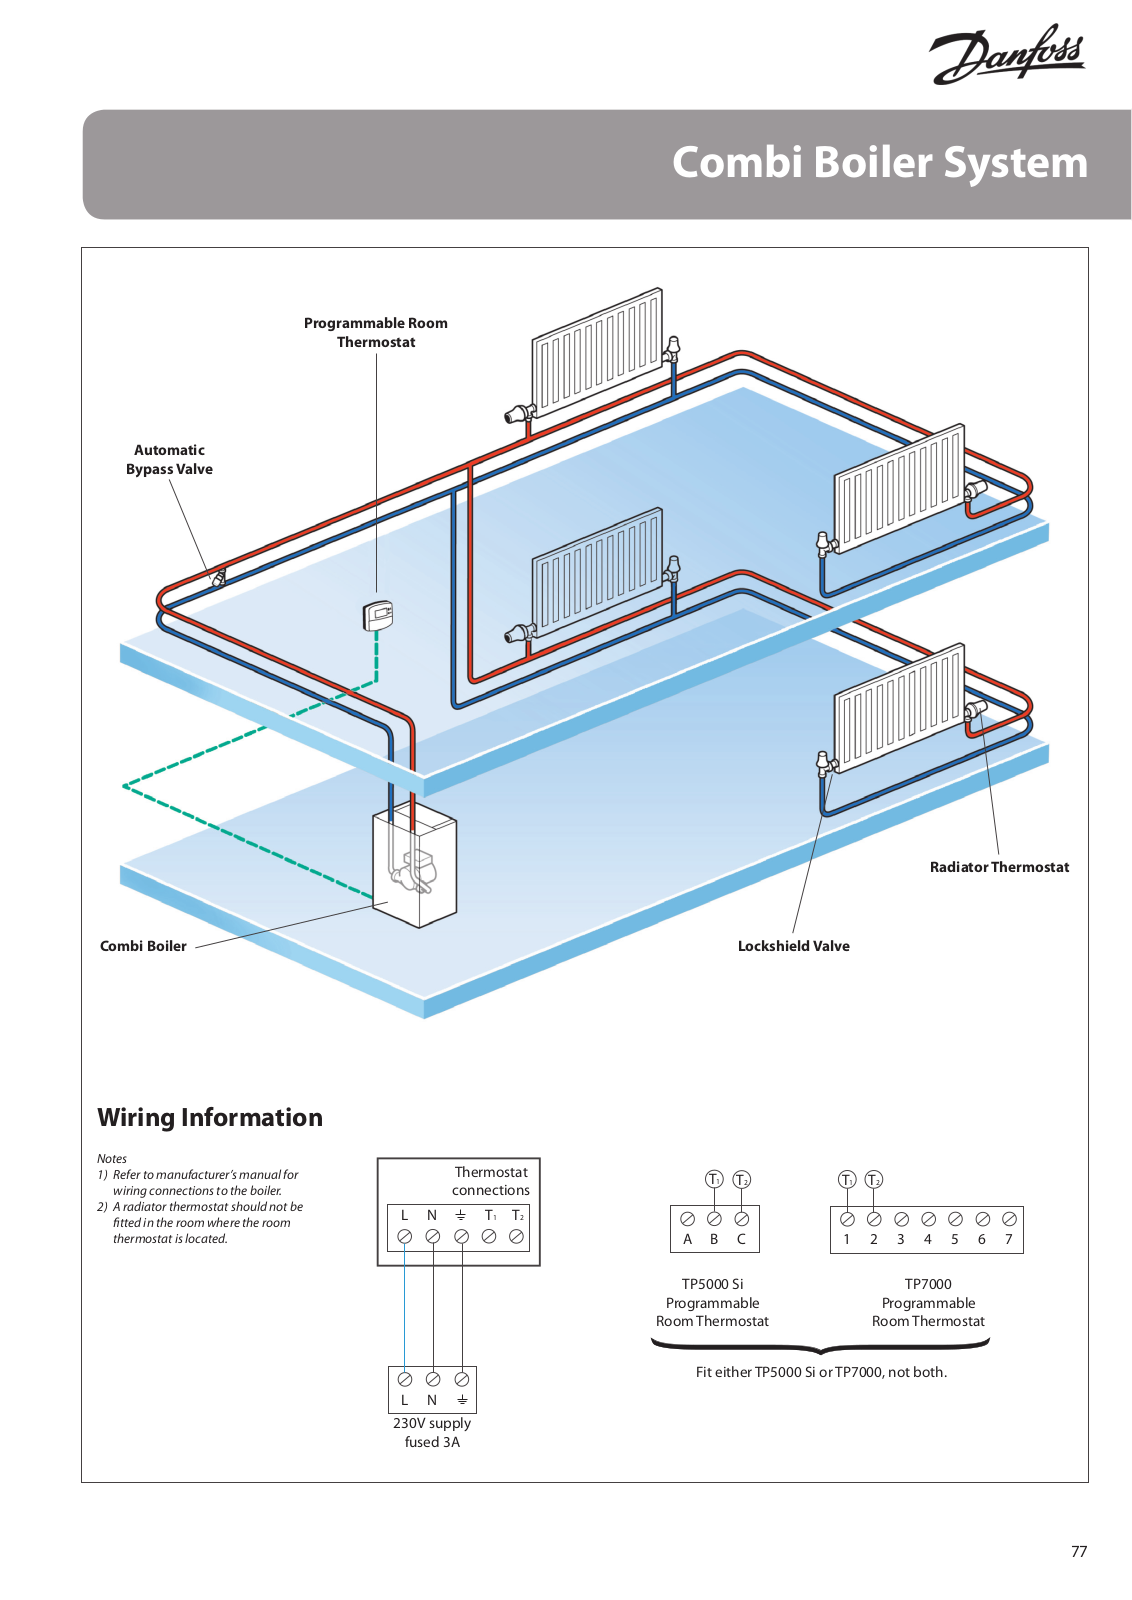 Danfoss Combi Boiler System Application guide